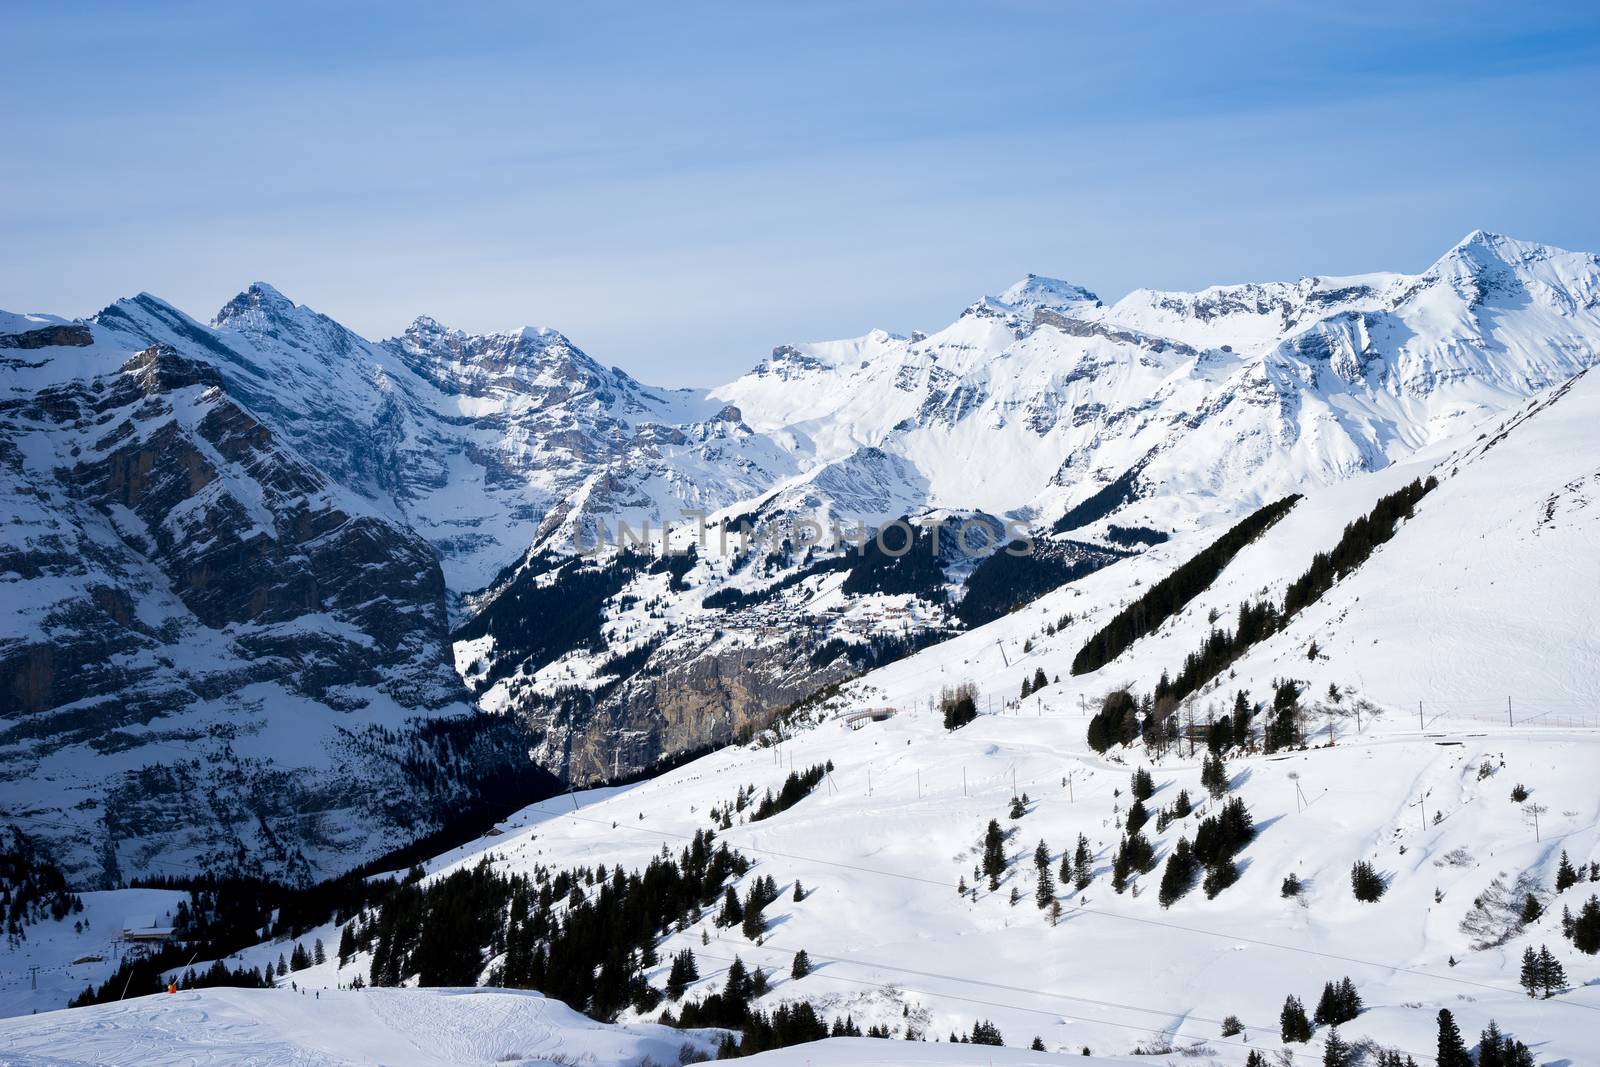 Swiss mountain, Jungfrau, Switzerland, ski resort  by Alicephoto